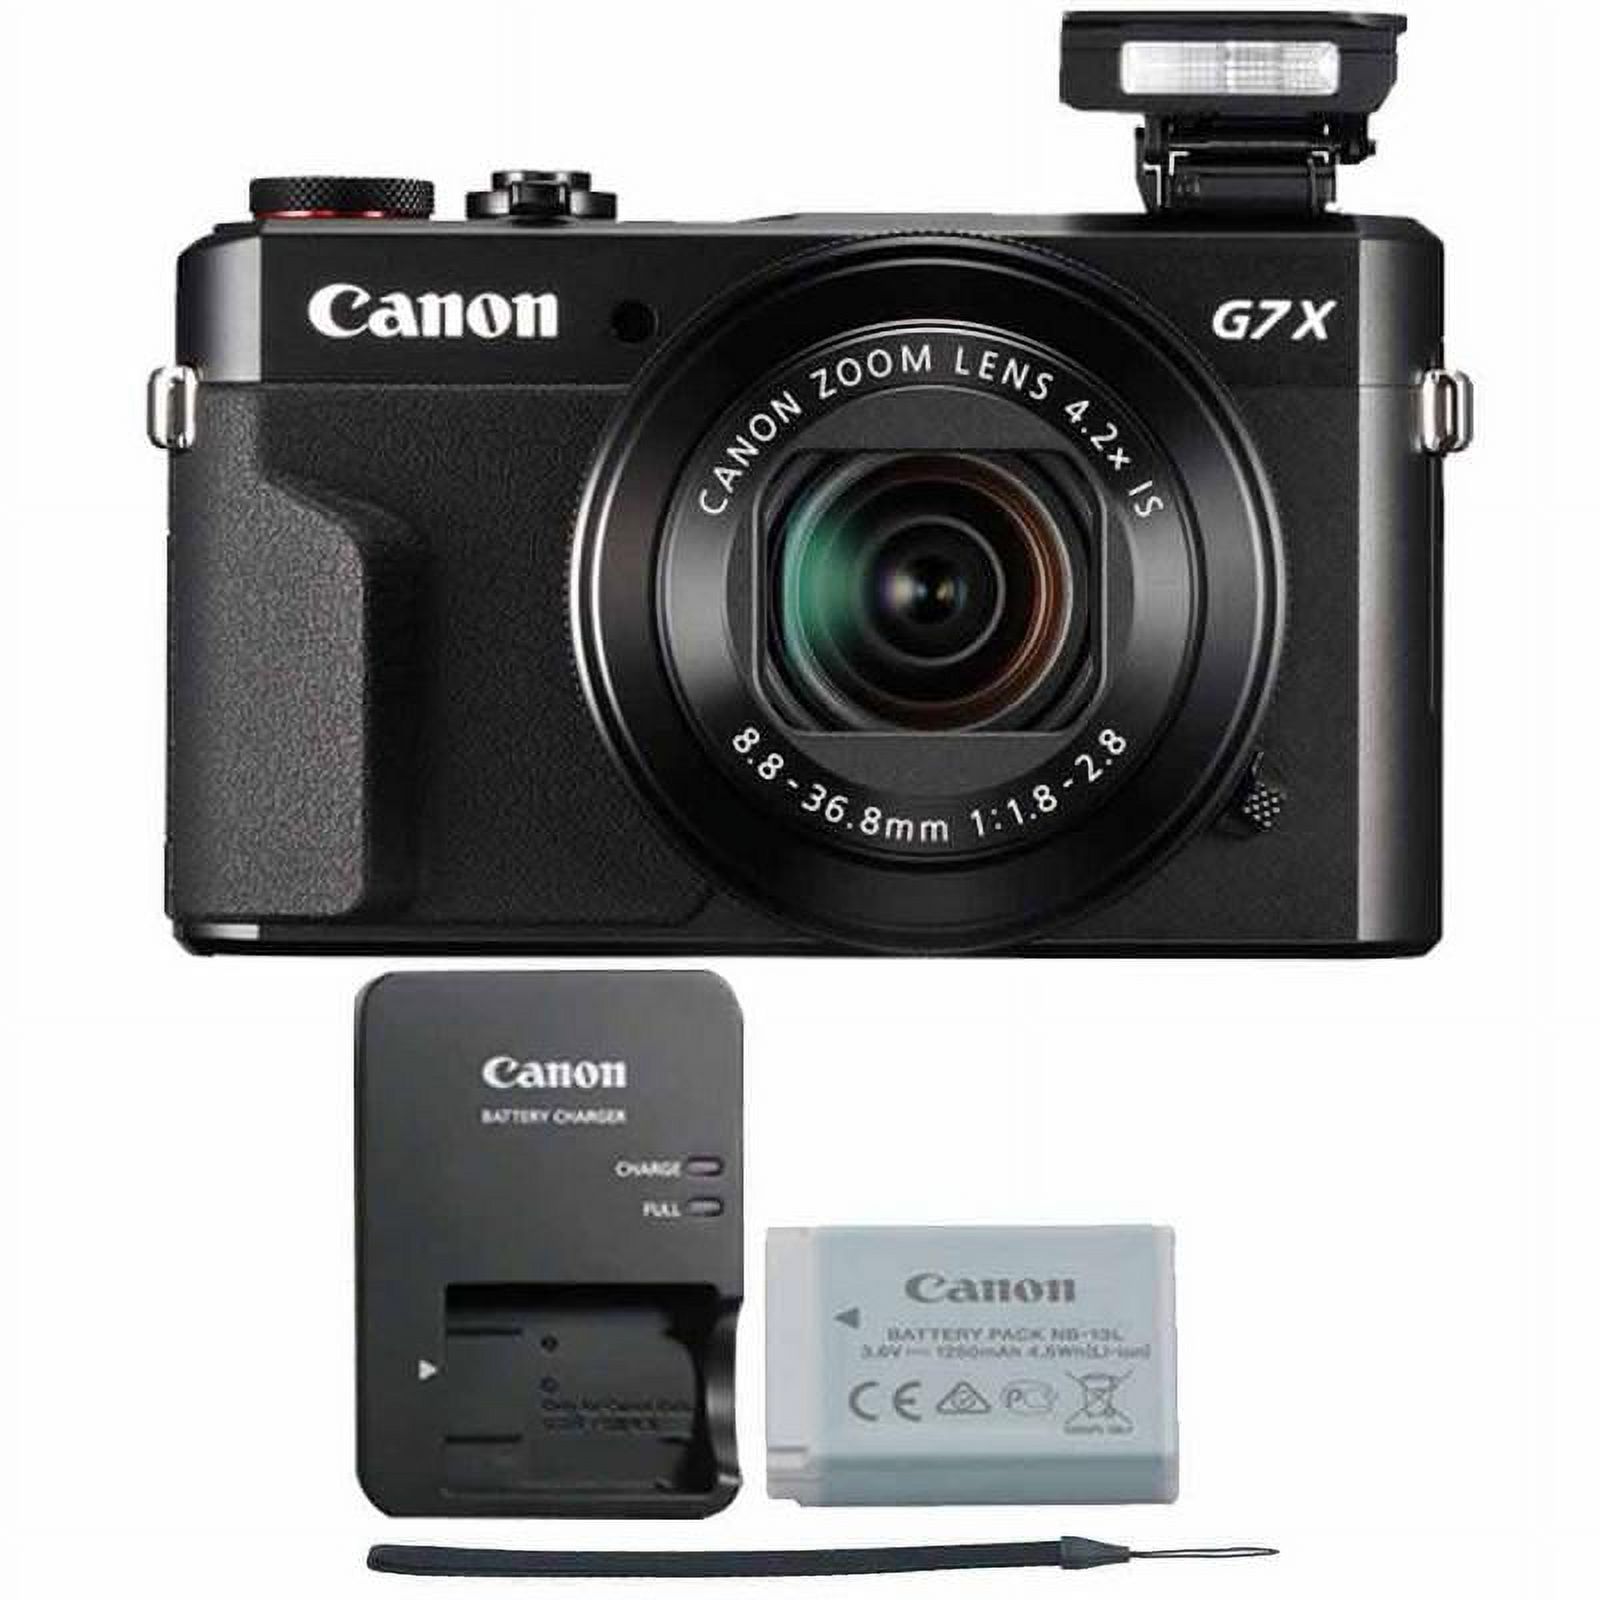 Canon Powershot G7x II 20.1MP Digital Camera Black with Photo Editing Software Kit - image 2 of 9